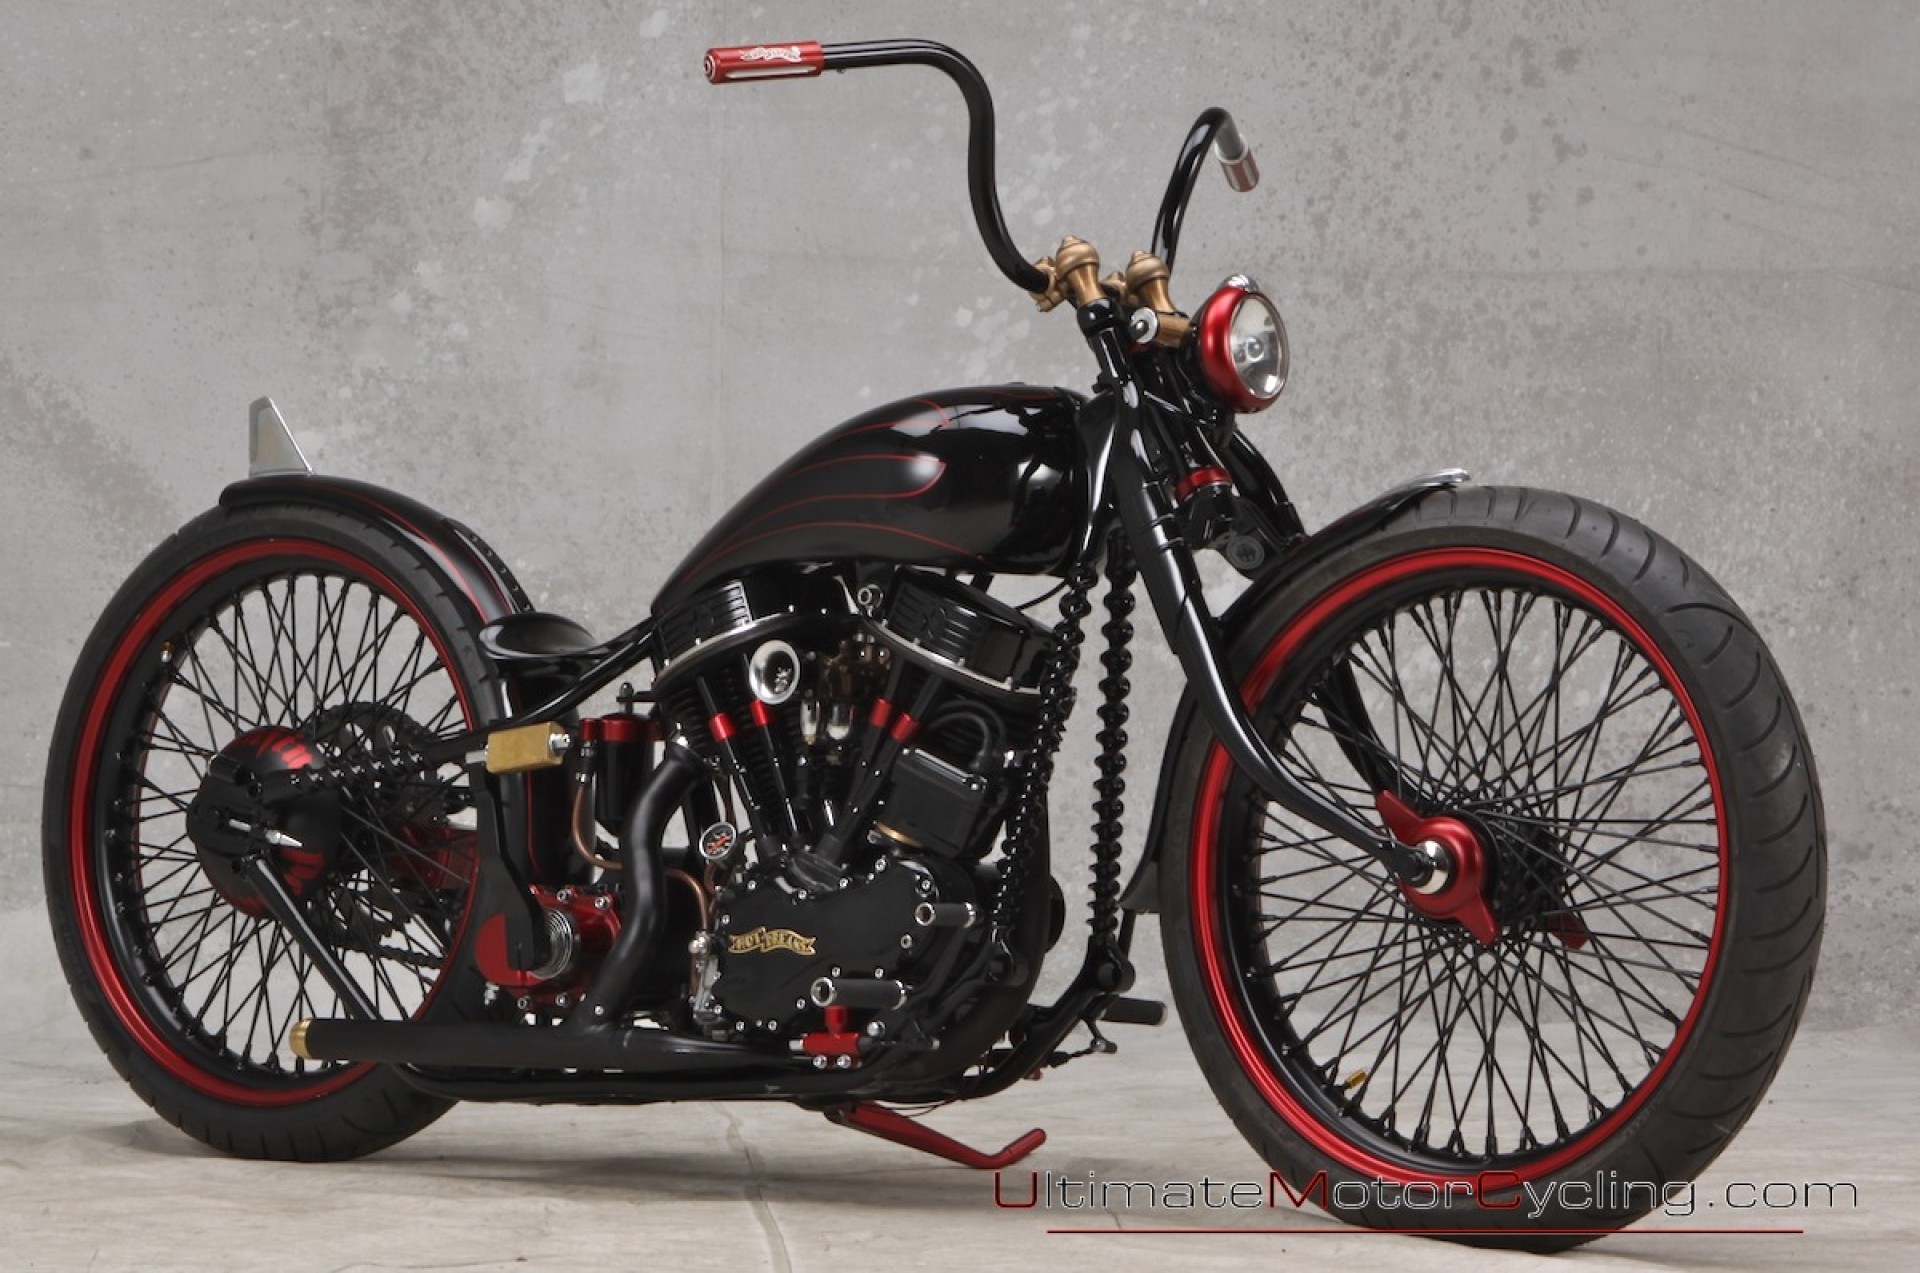 1920x1273 Harley Davidson choppers | Custom harley davidson motorcycle wallpaper  ultimate motorcycling - LGMSports.com